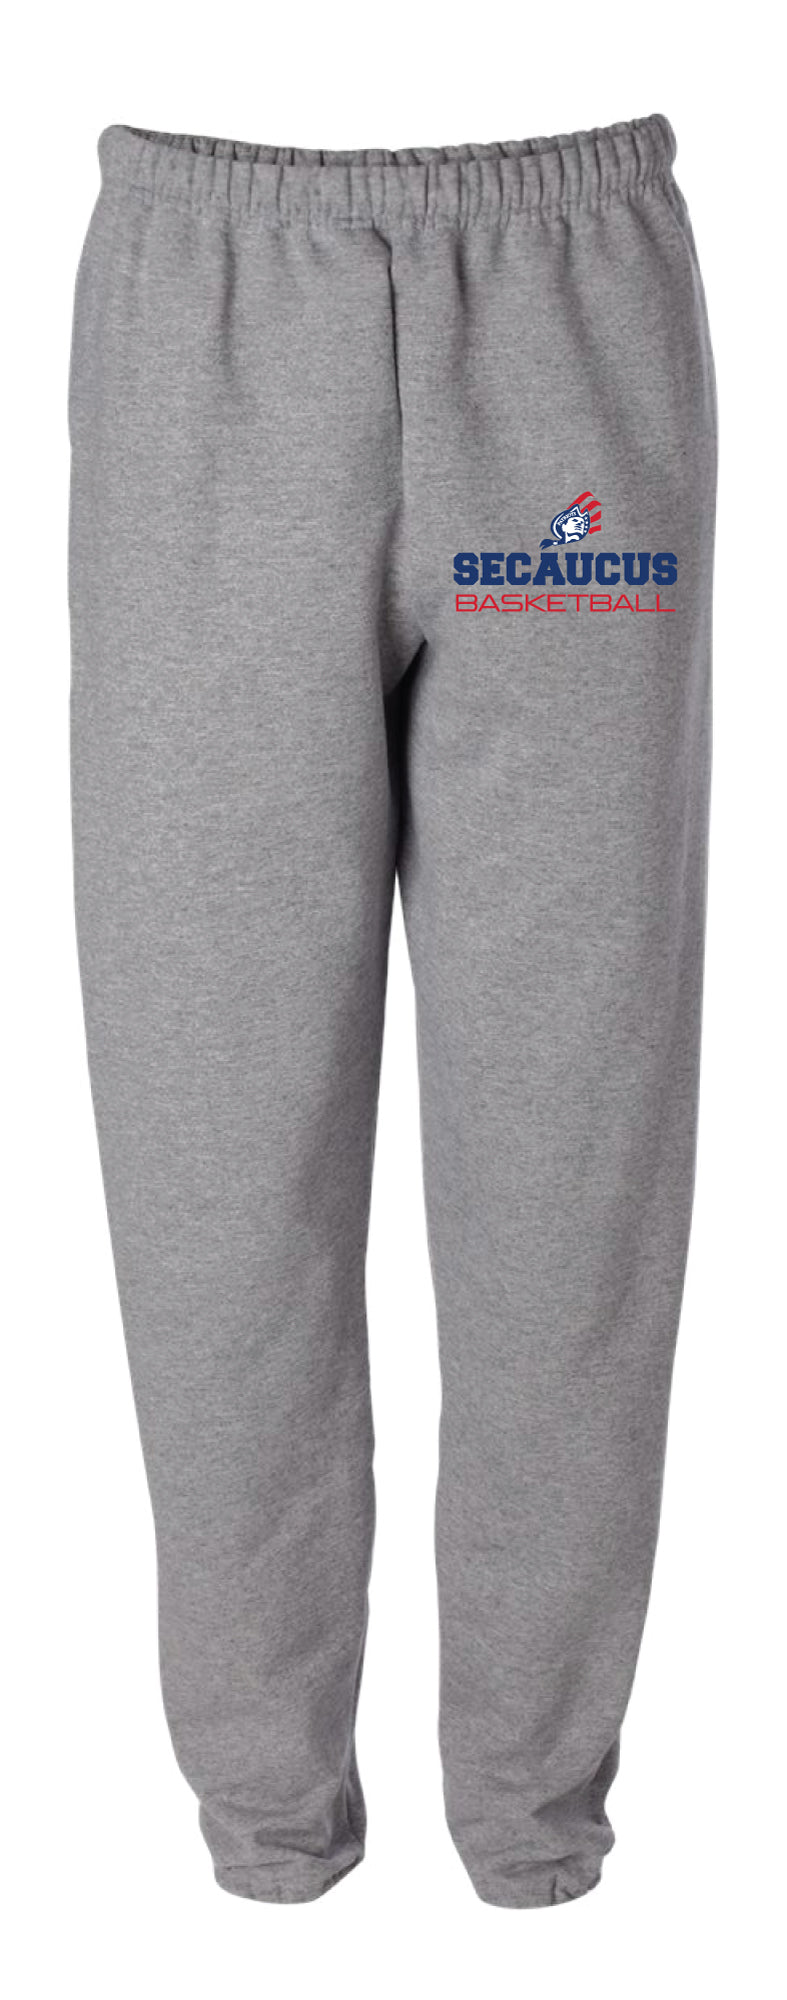 Secaucus High School Basketball Cotton Sweatpants - Grey - 5KounT2018